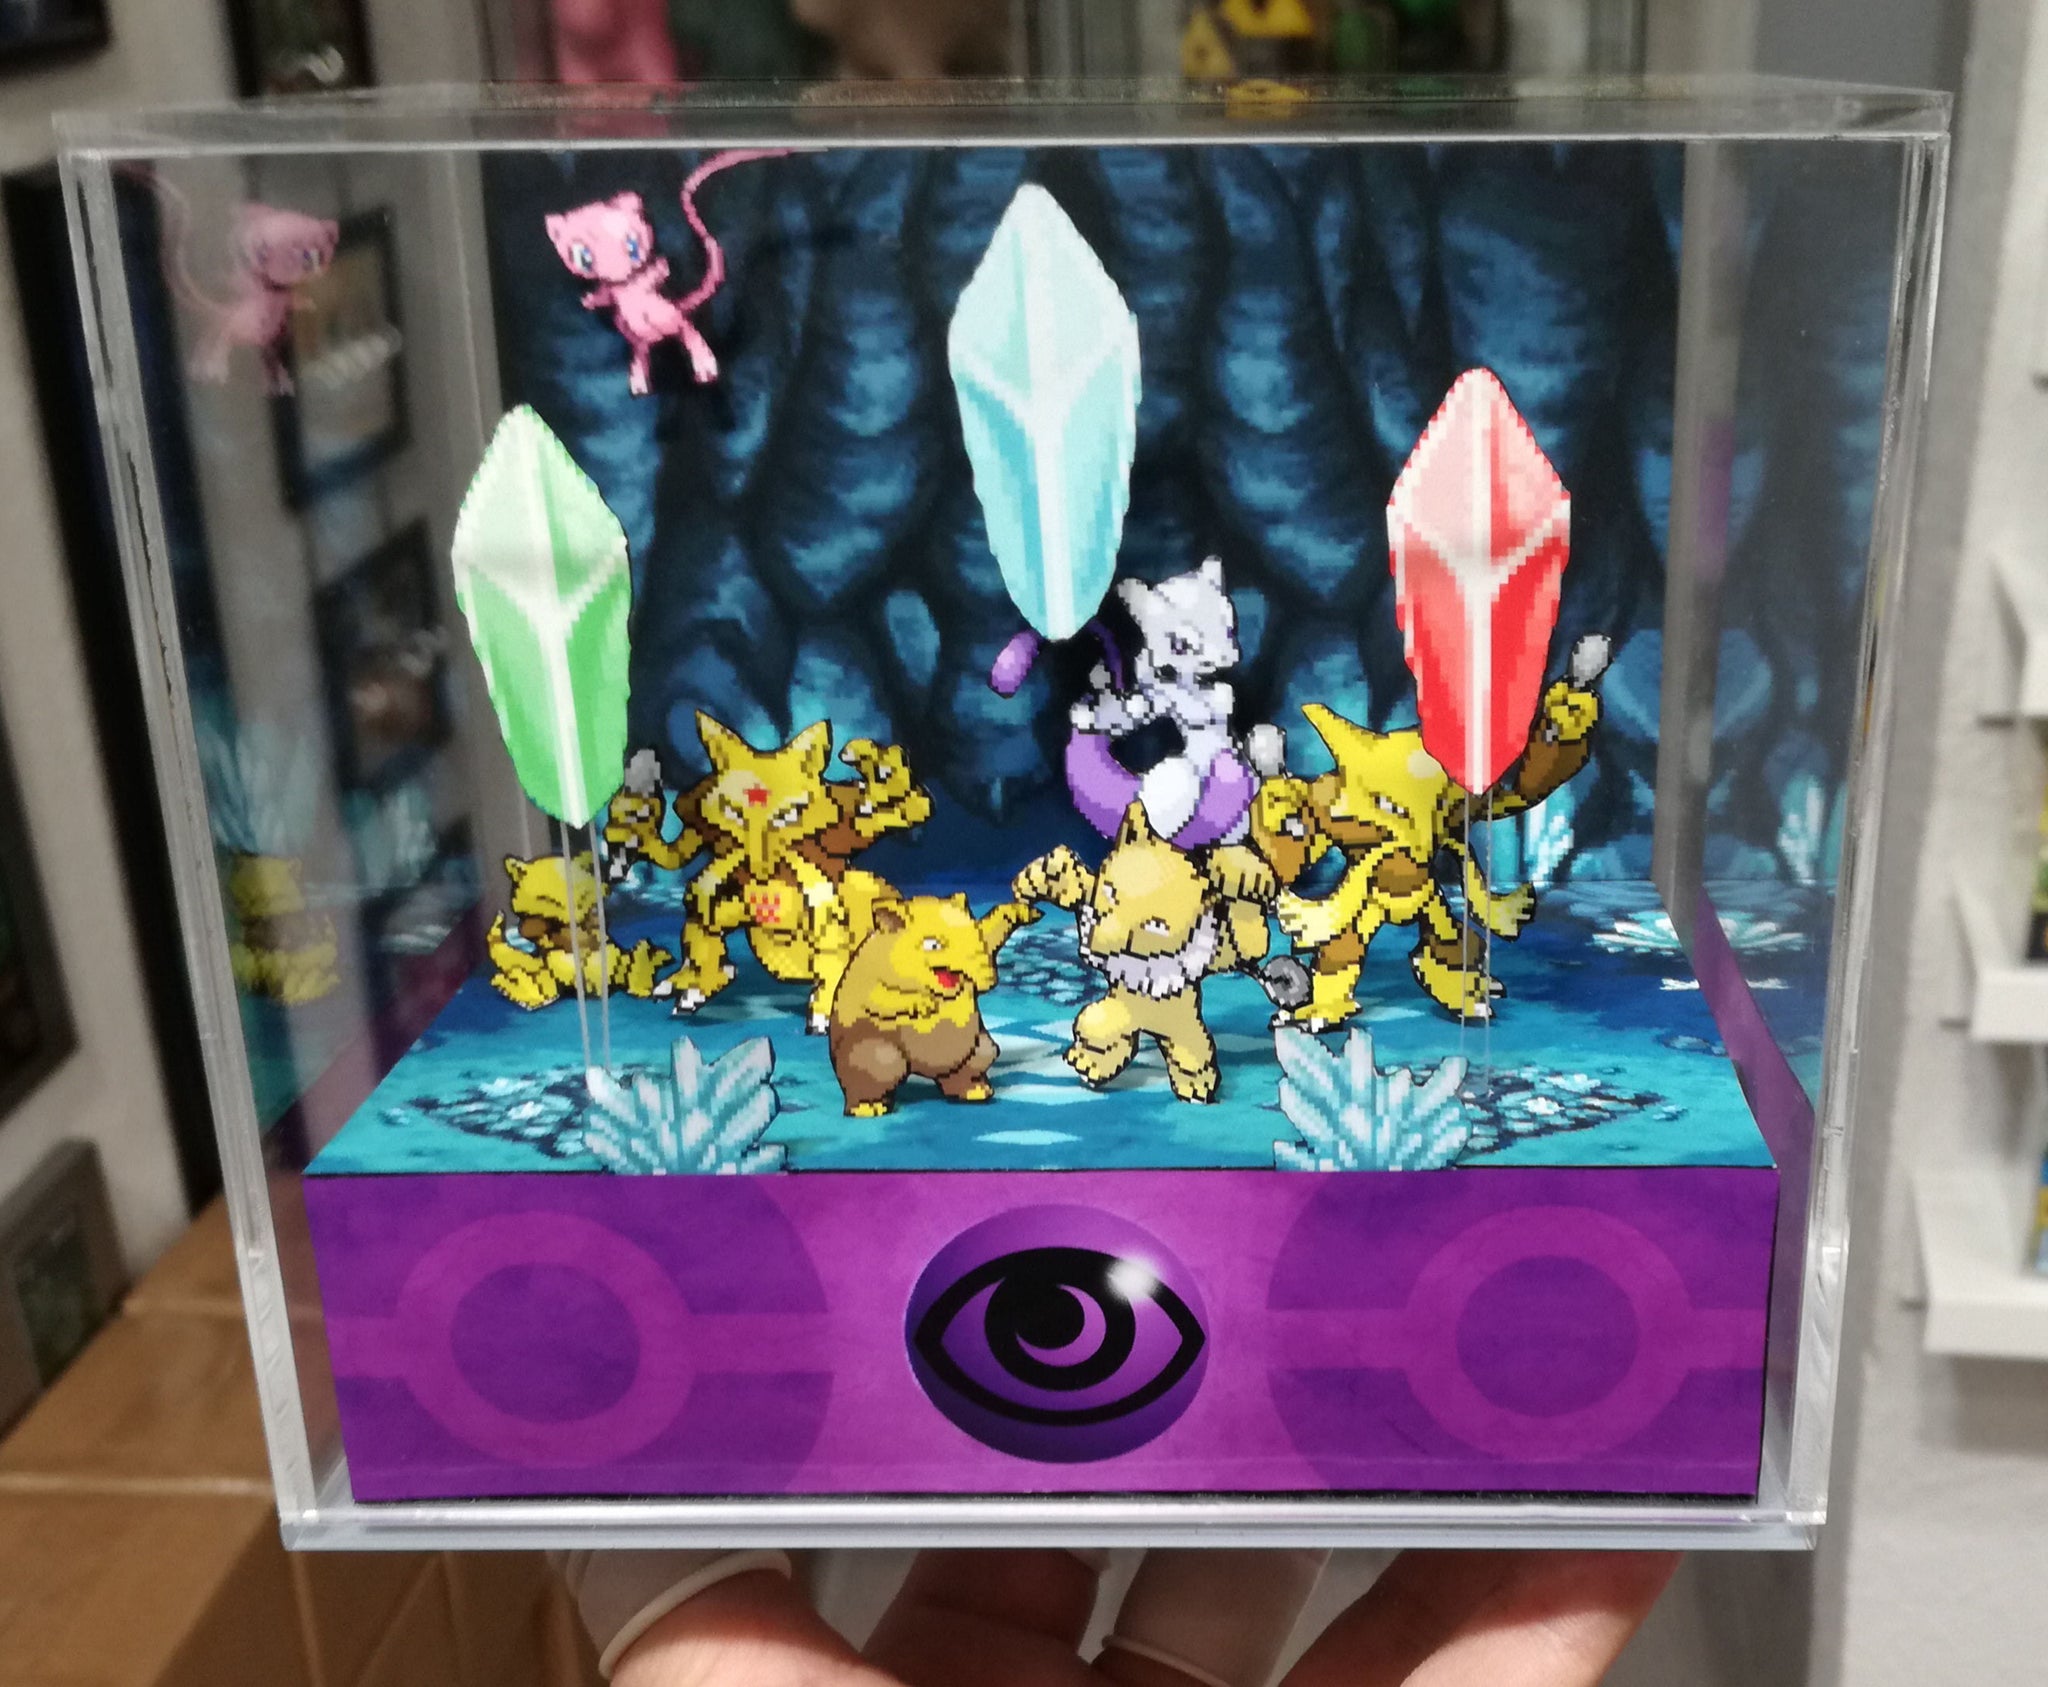 Pokemon Diorama – ARTS-MD